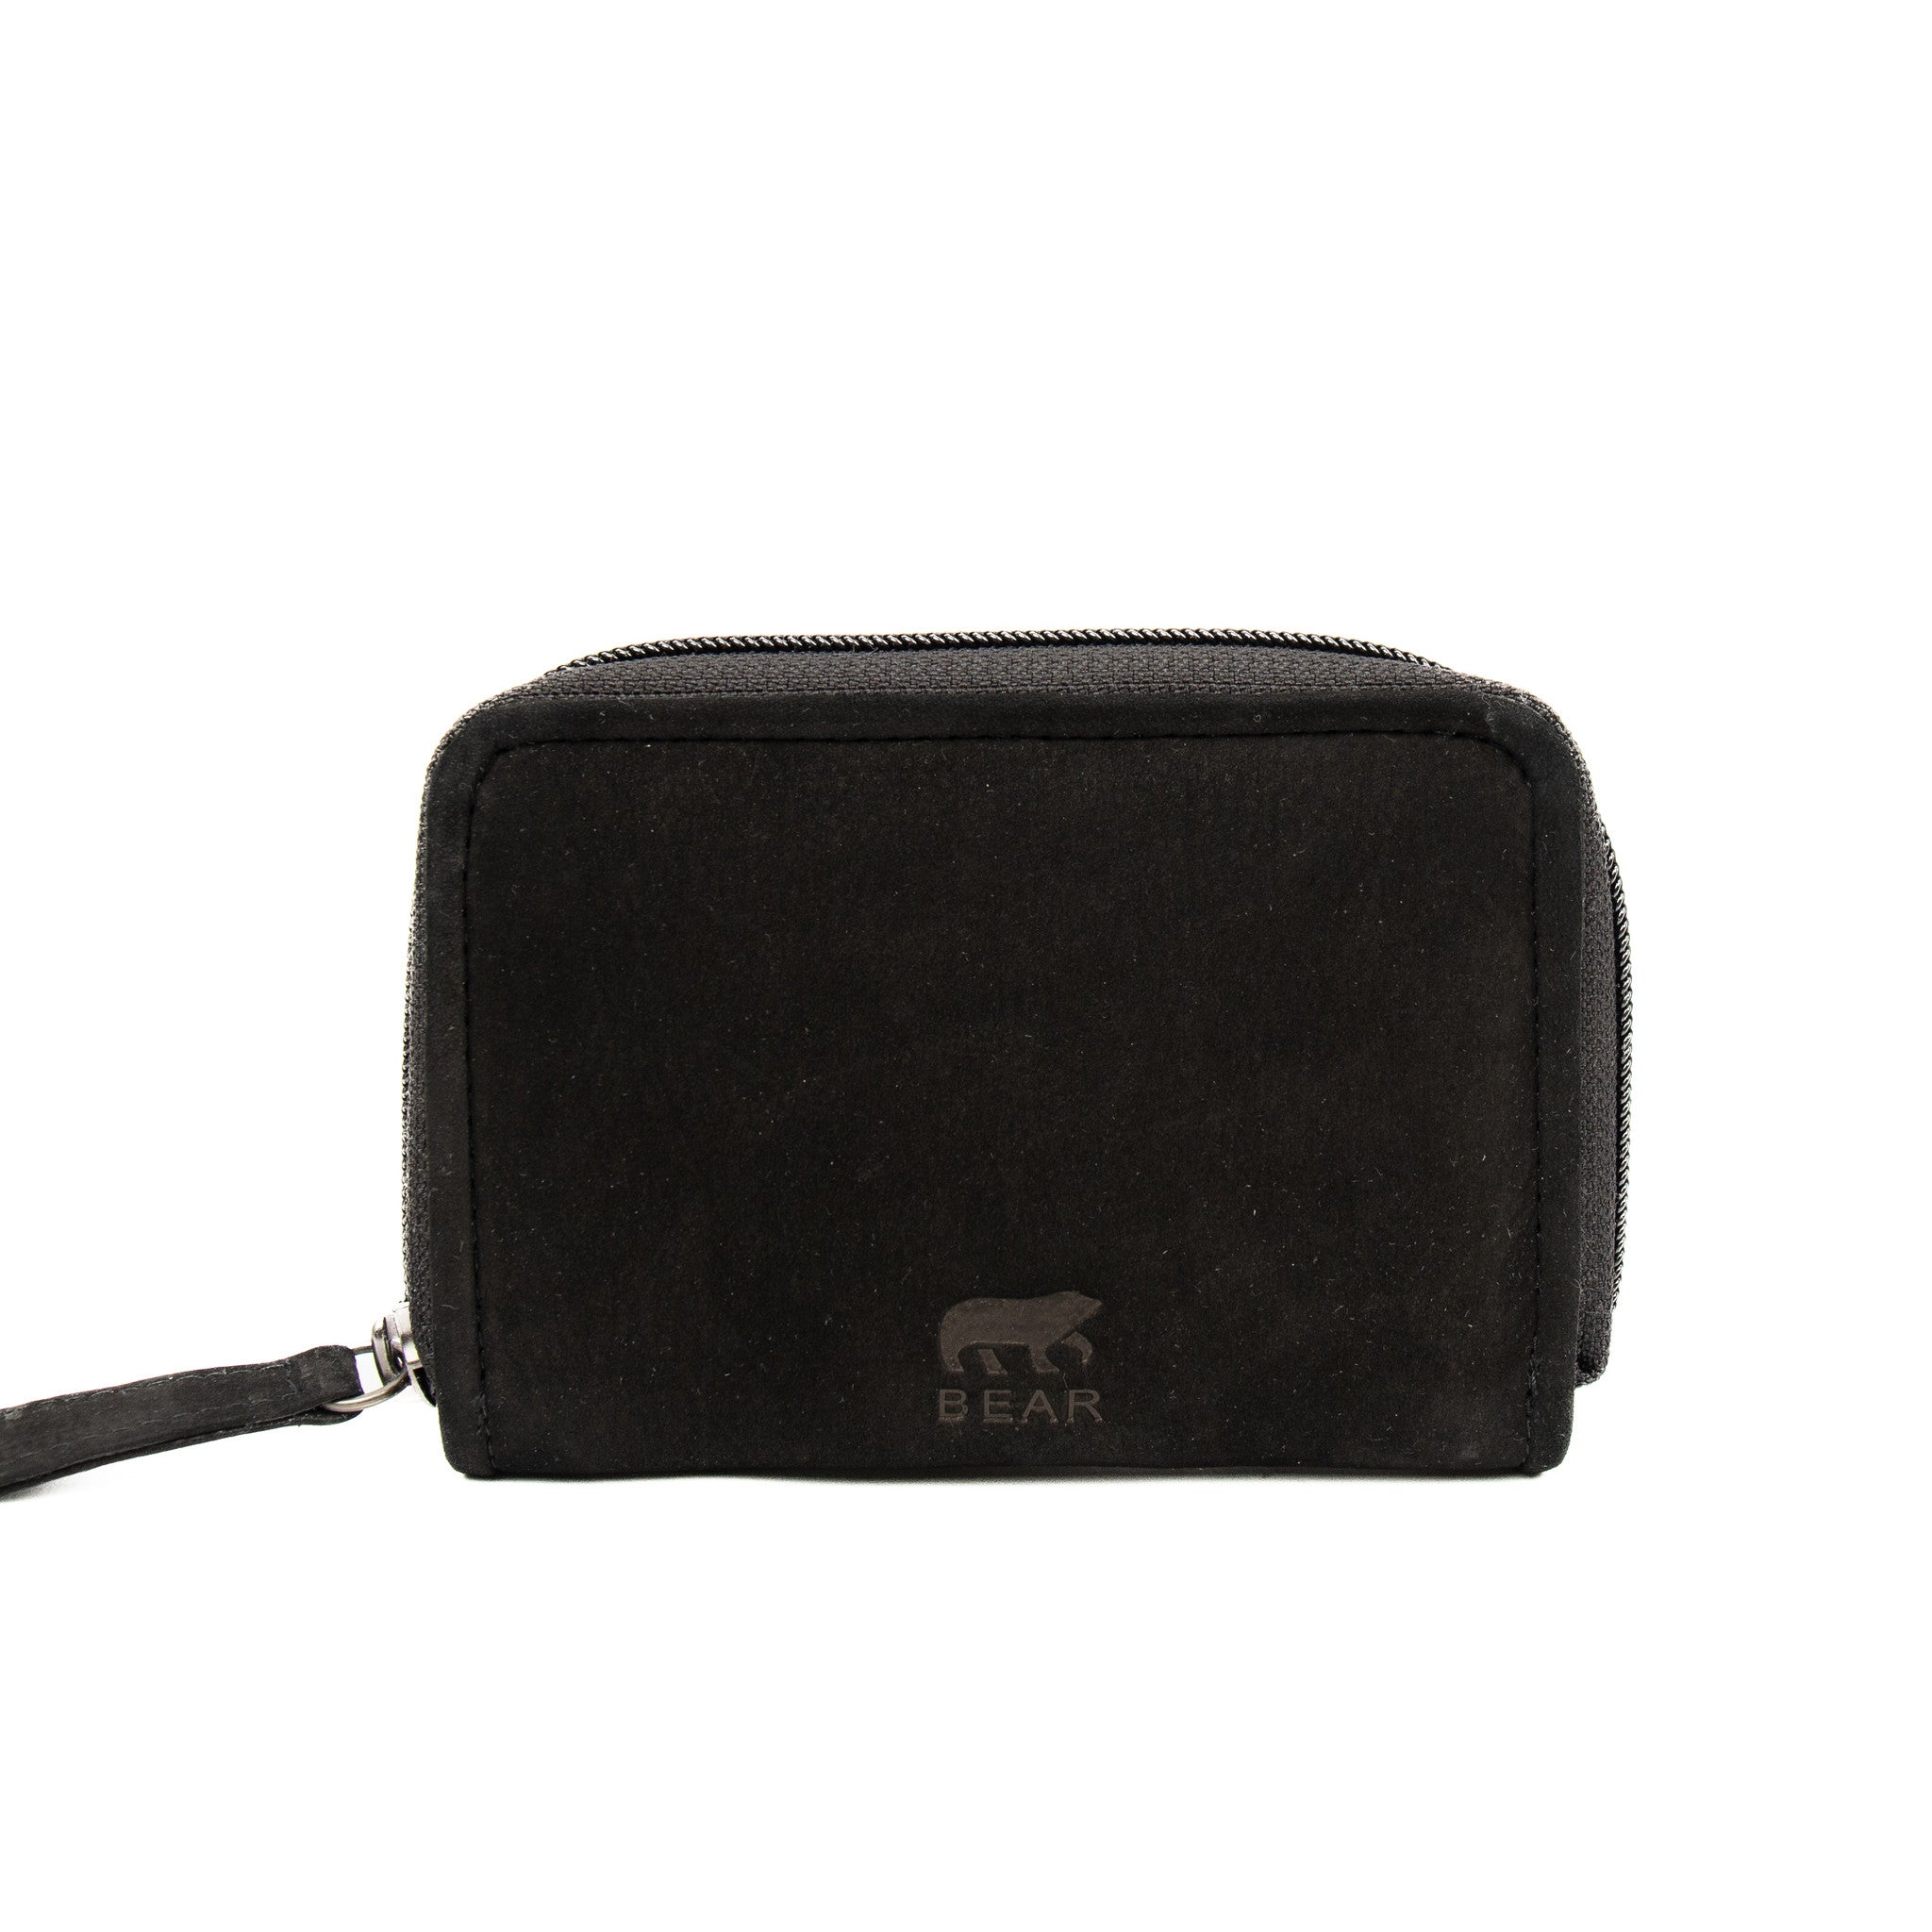 Wallet 'Mika' black - SL 11079